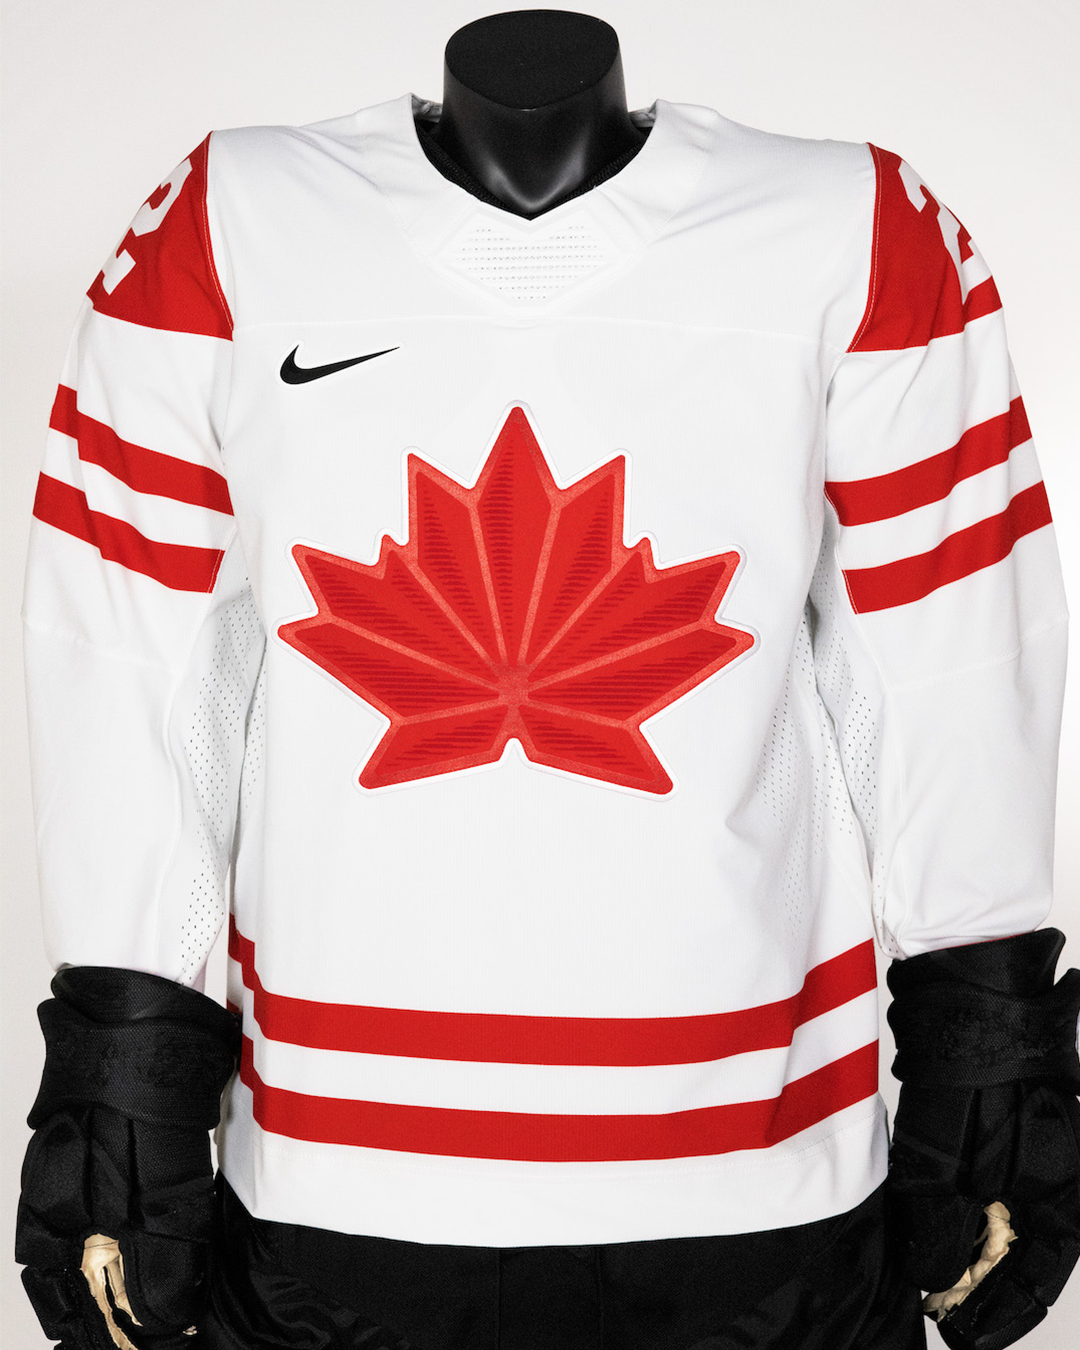 Team Canada white hockey jersey for Beijing 2022